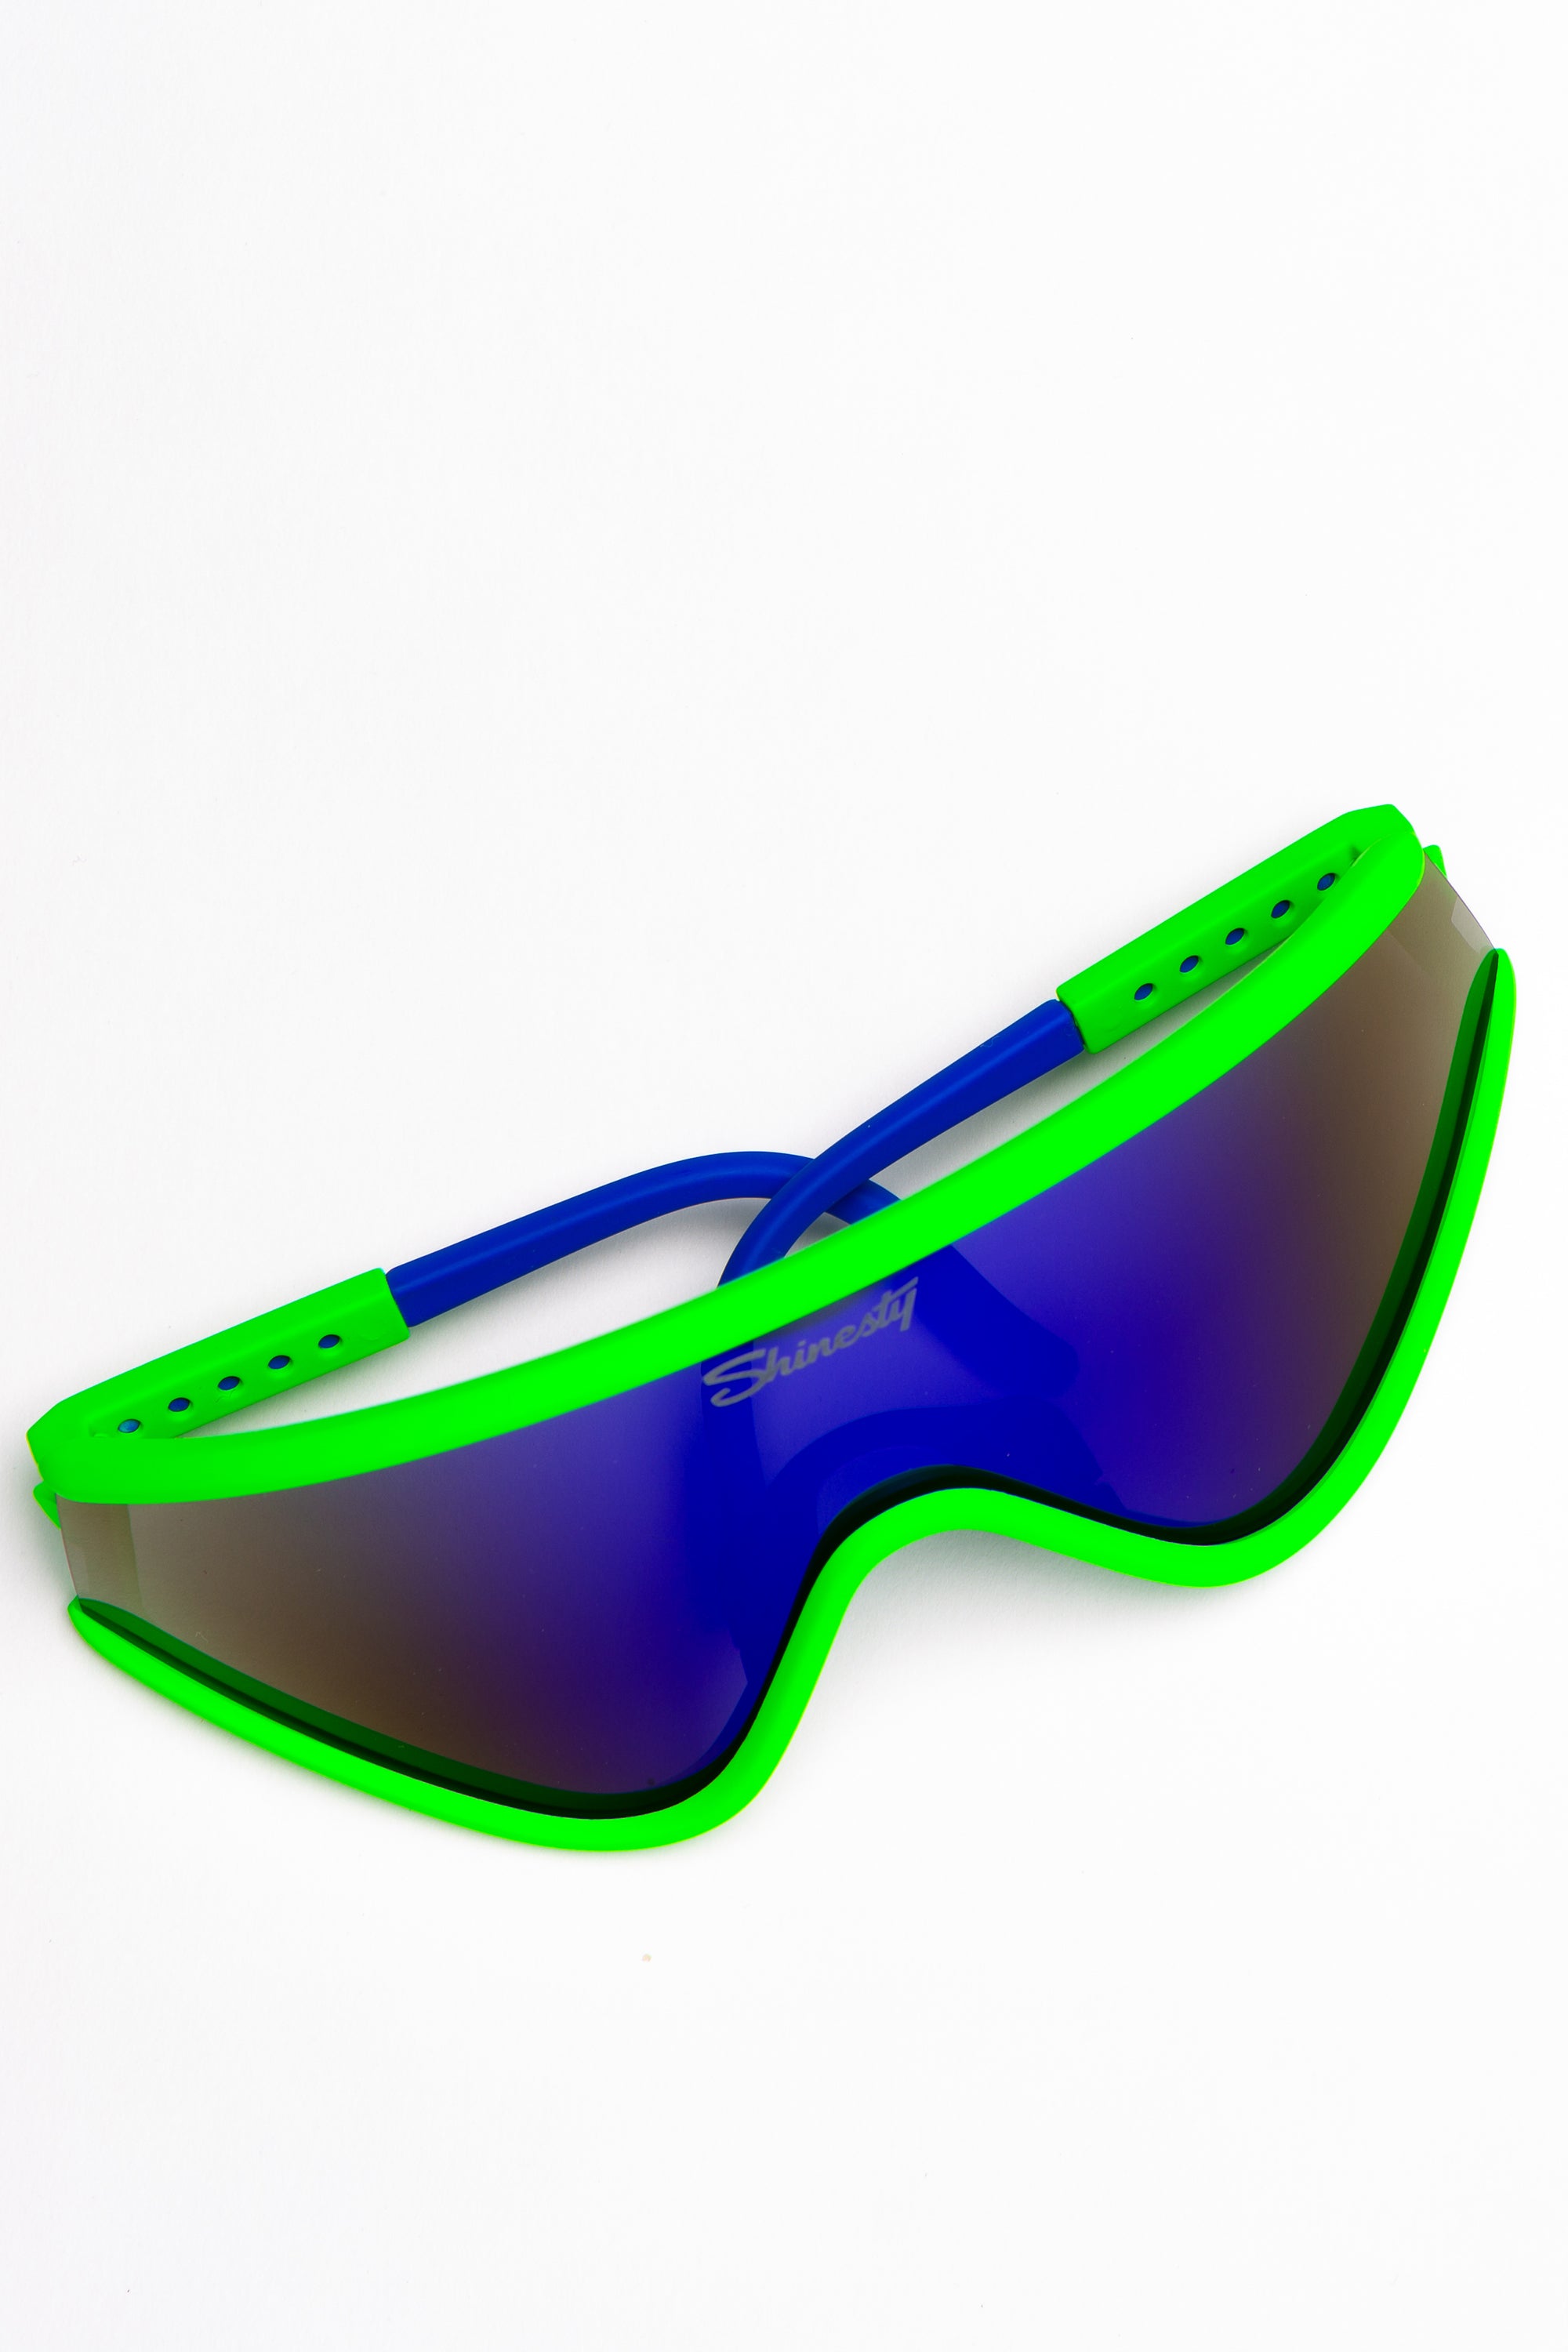 CHIMI x Joeh Ighe New Colorway Sunglasses | Hypebae